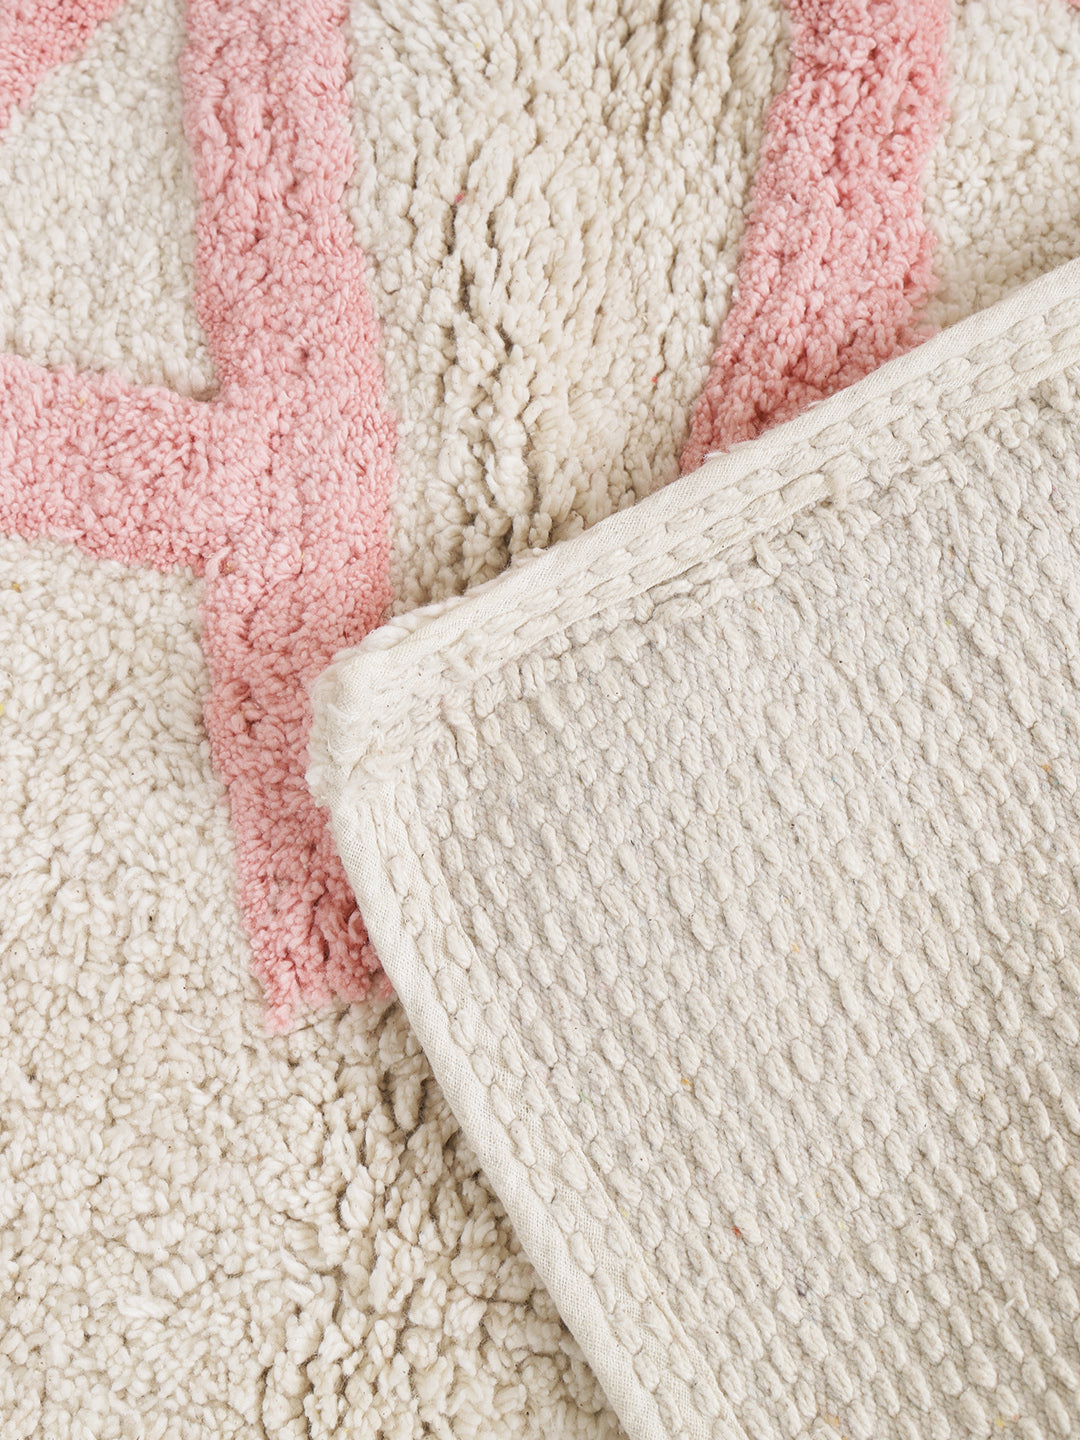 White & Pink Tufted Cotton Bath Rug